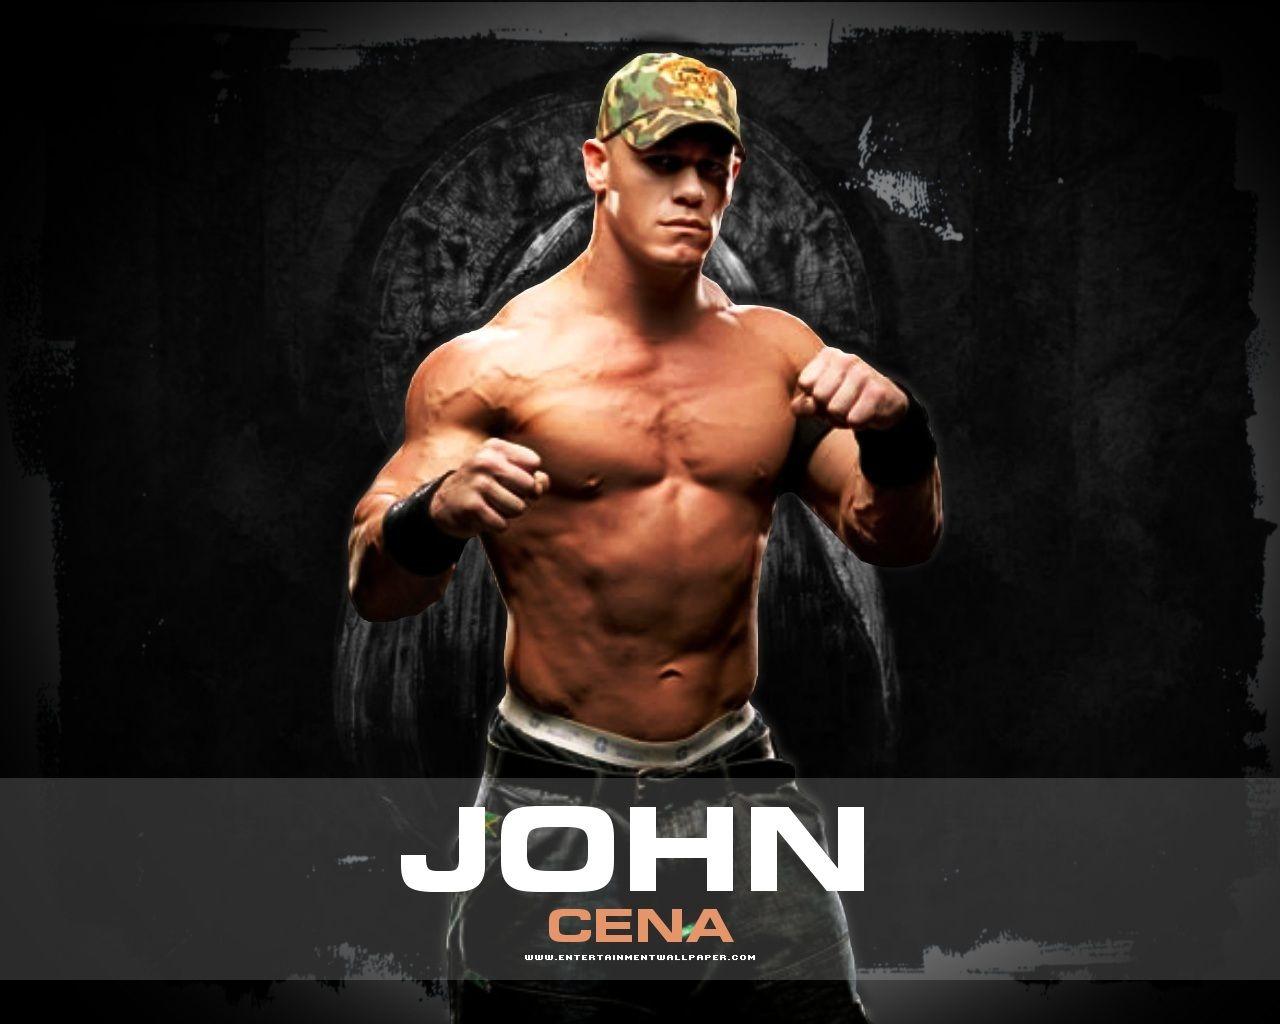 WWE John Cena wallpaper HD free Download. HD Wallpaper